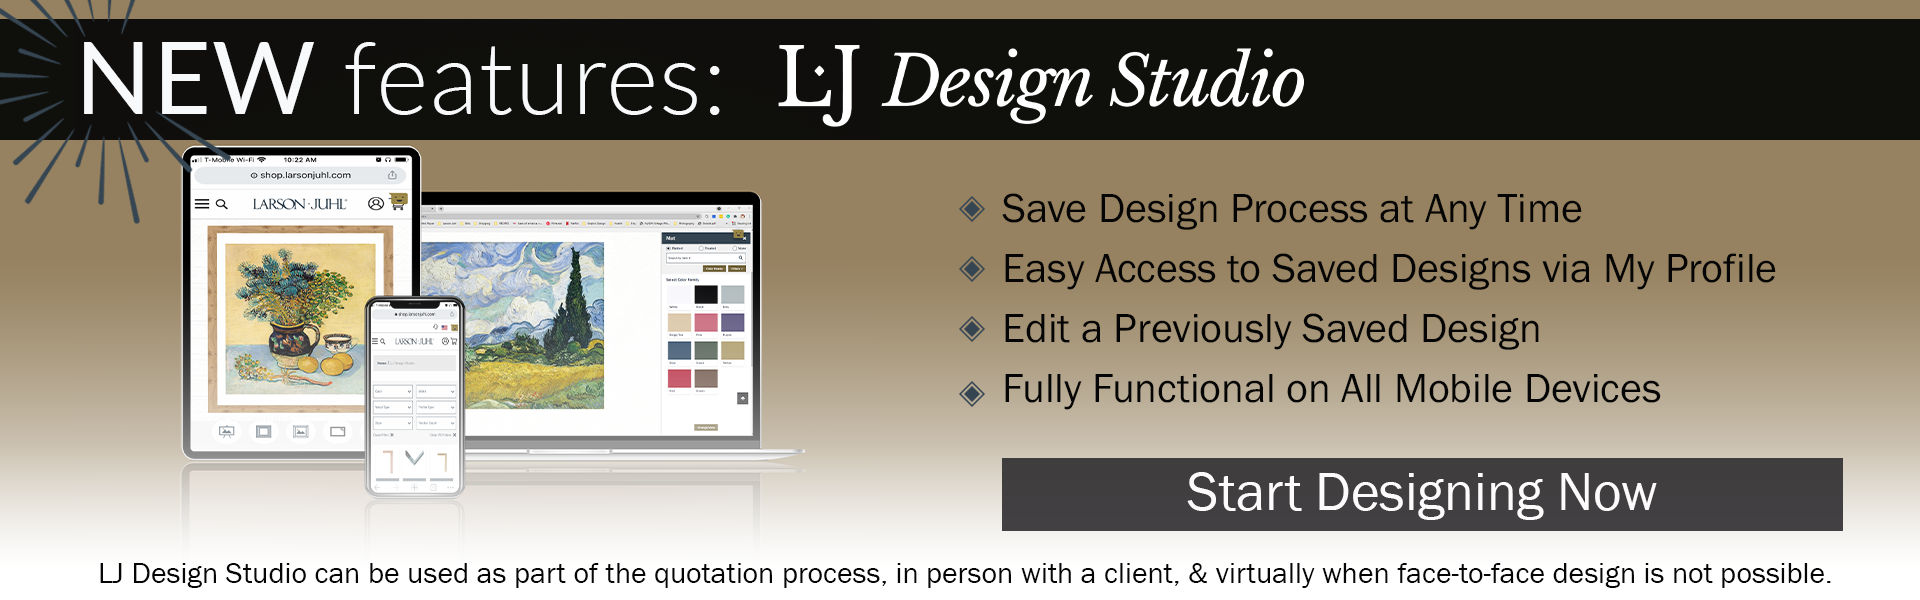 LJ Design Studio